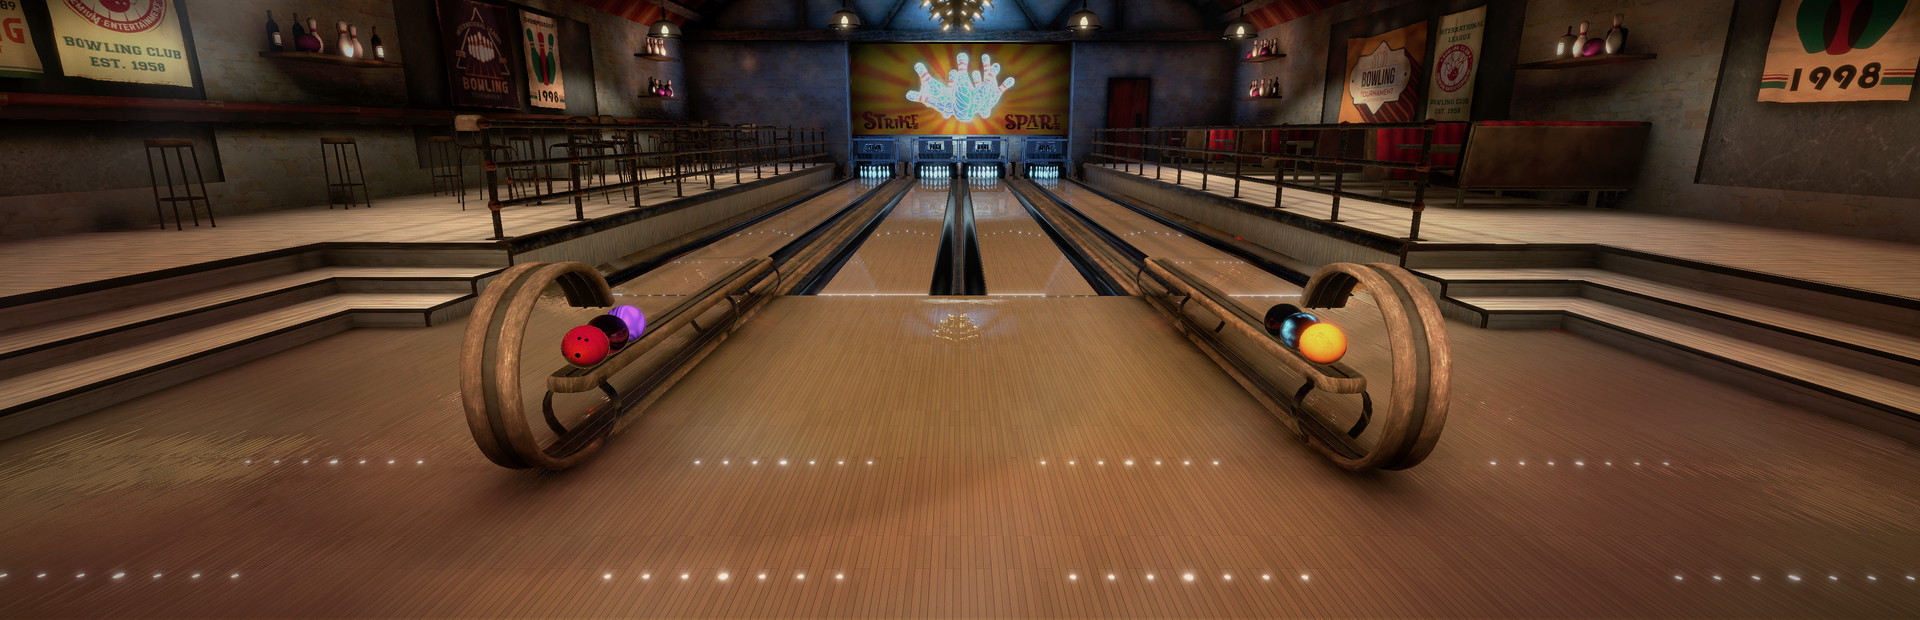 Premium Bowling cover image